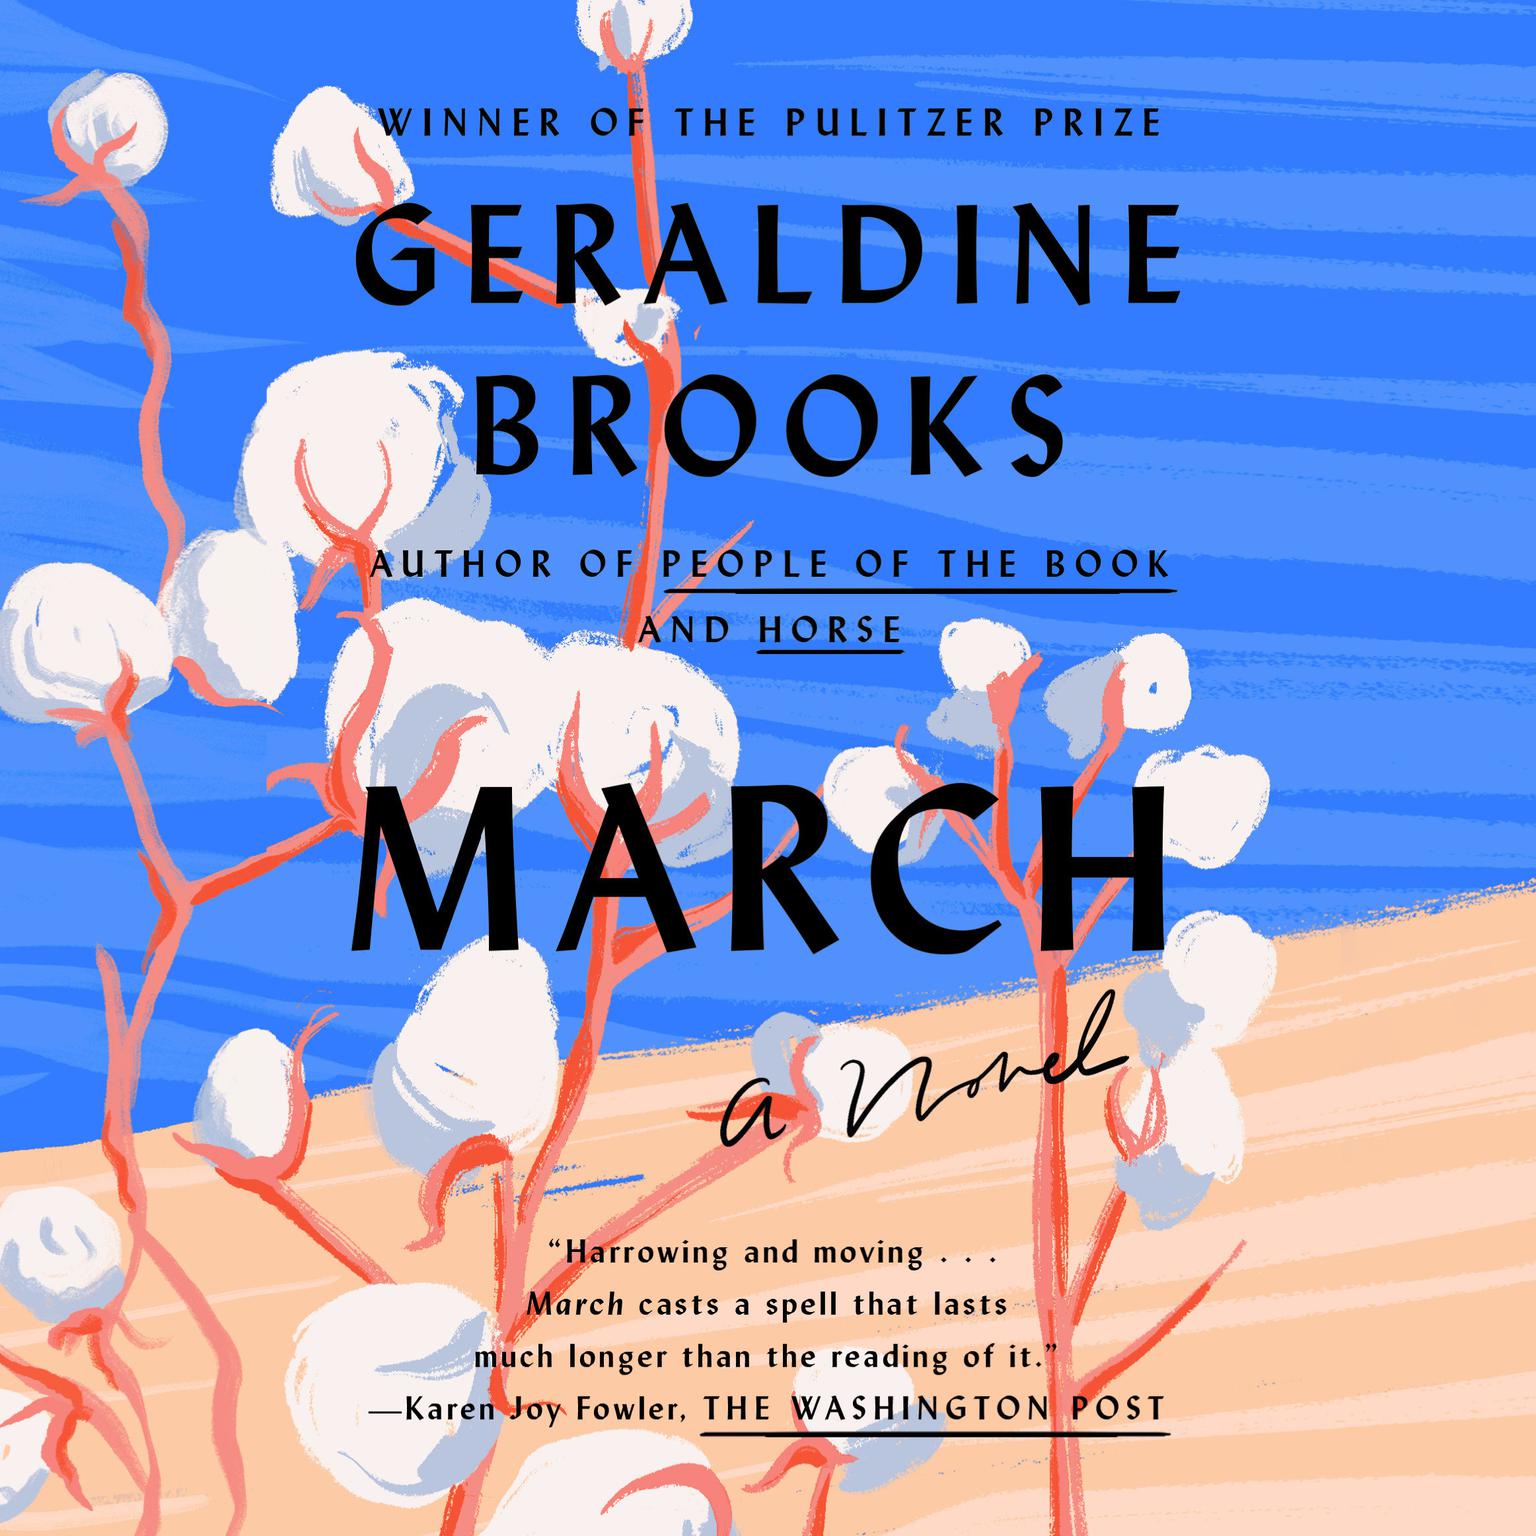 March: Pulitzer Prize Winner (A Novel) Audiobook, by Geraldine Brooks